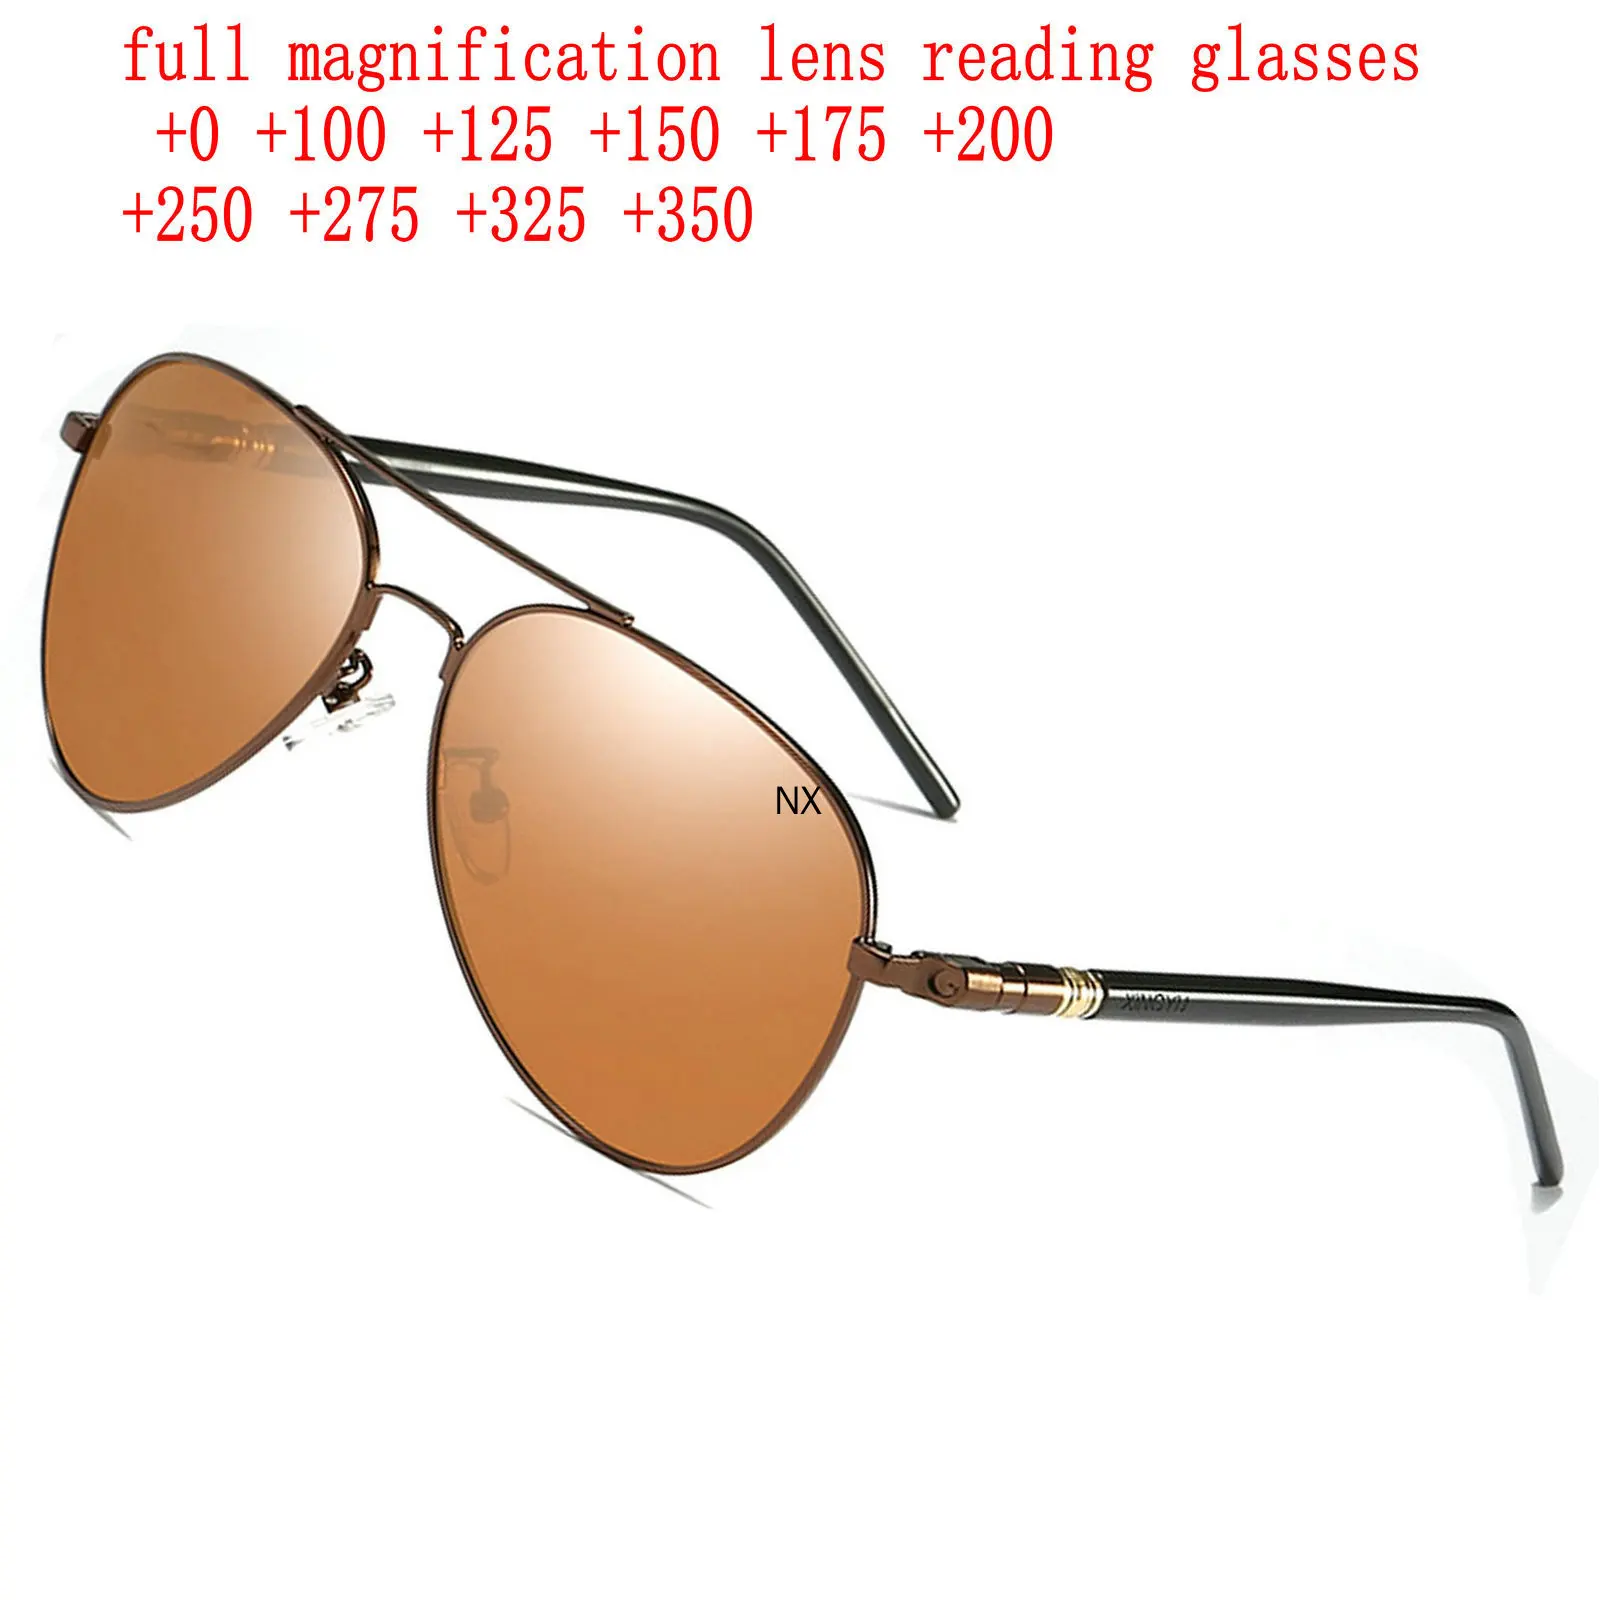 Sports Full Reading Sunglasses Men's Outdoor Driving Classic Reader Presbyopic Goggles Sun Glasses 